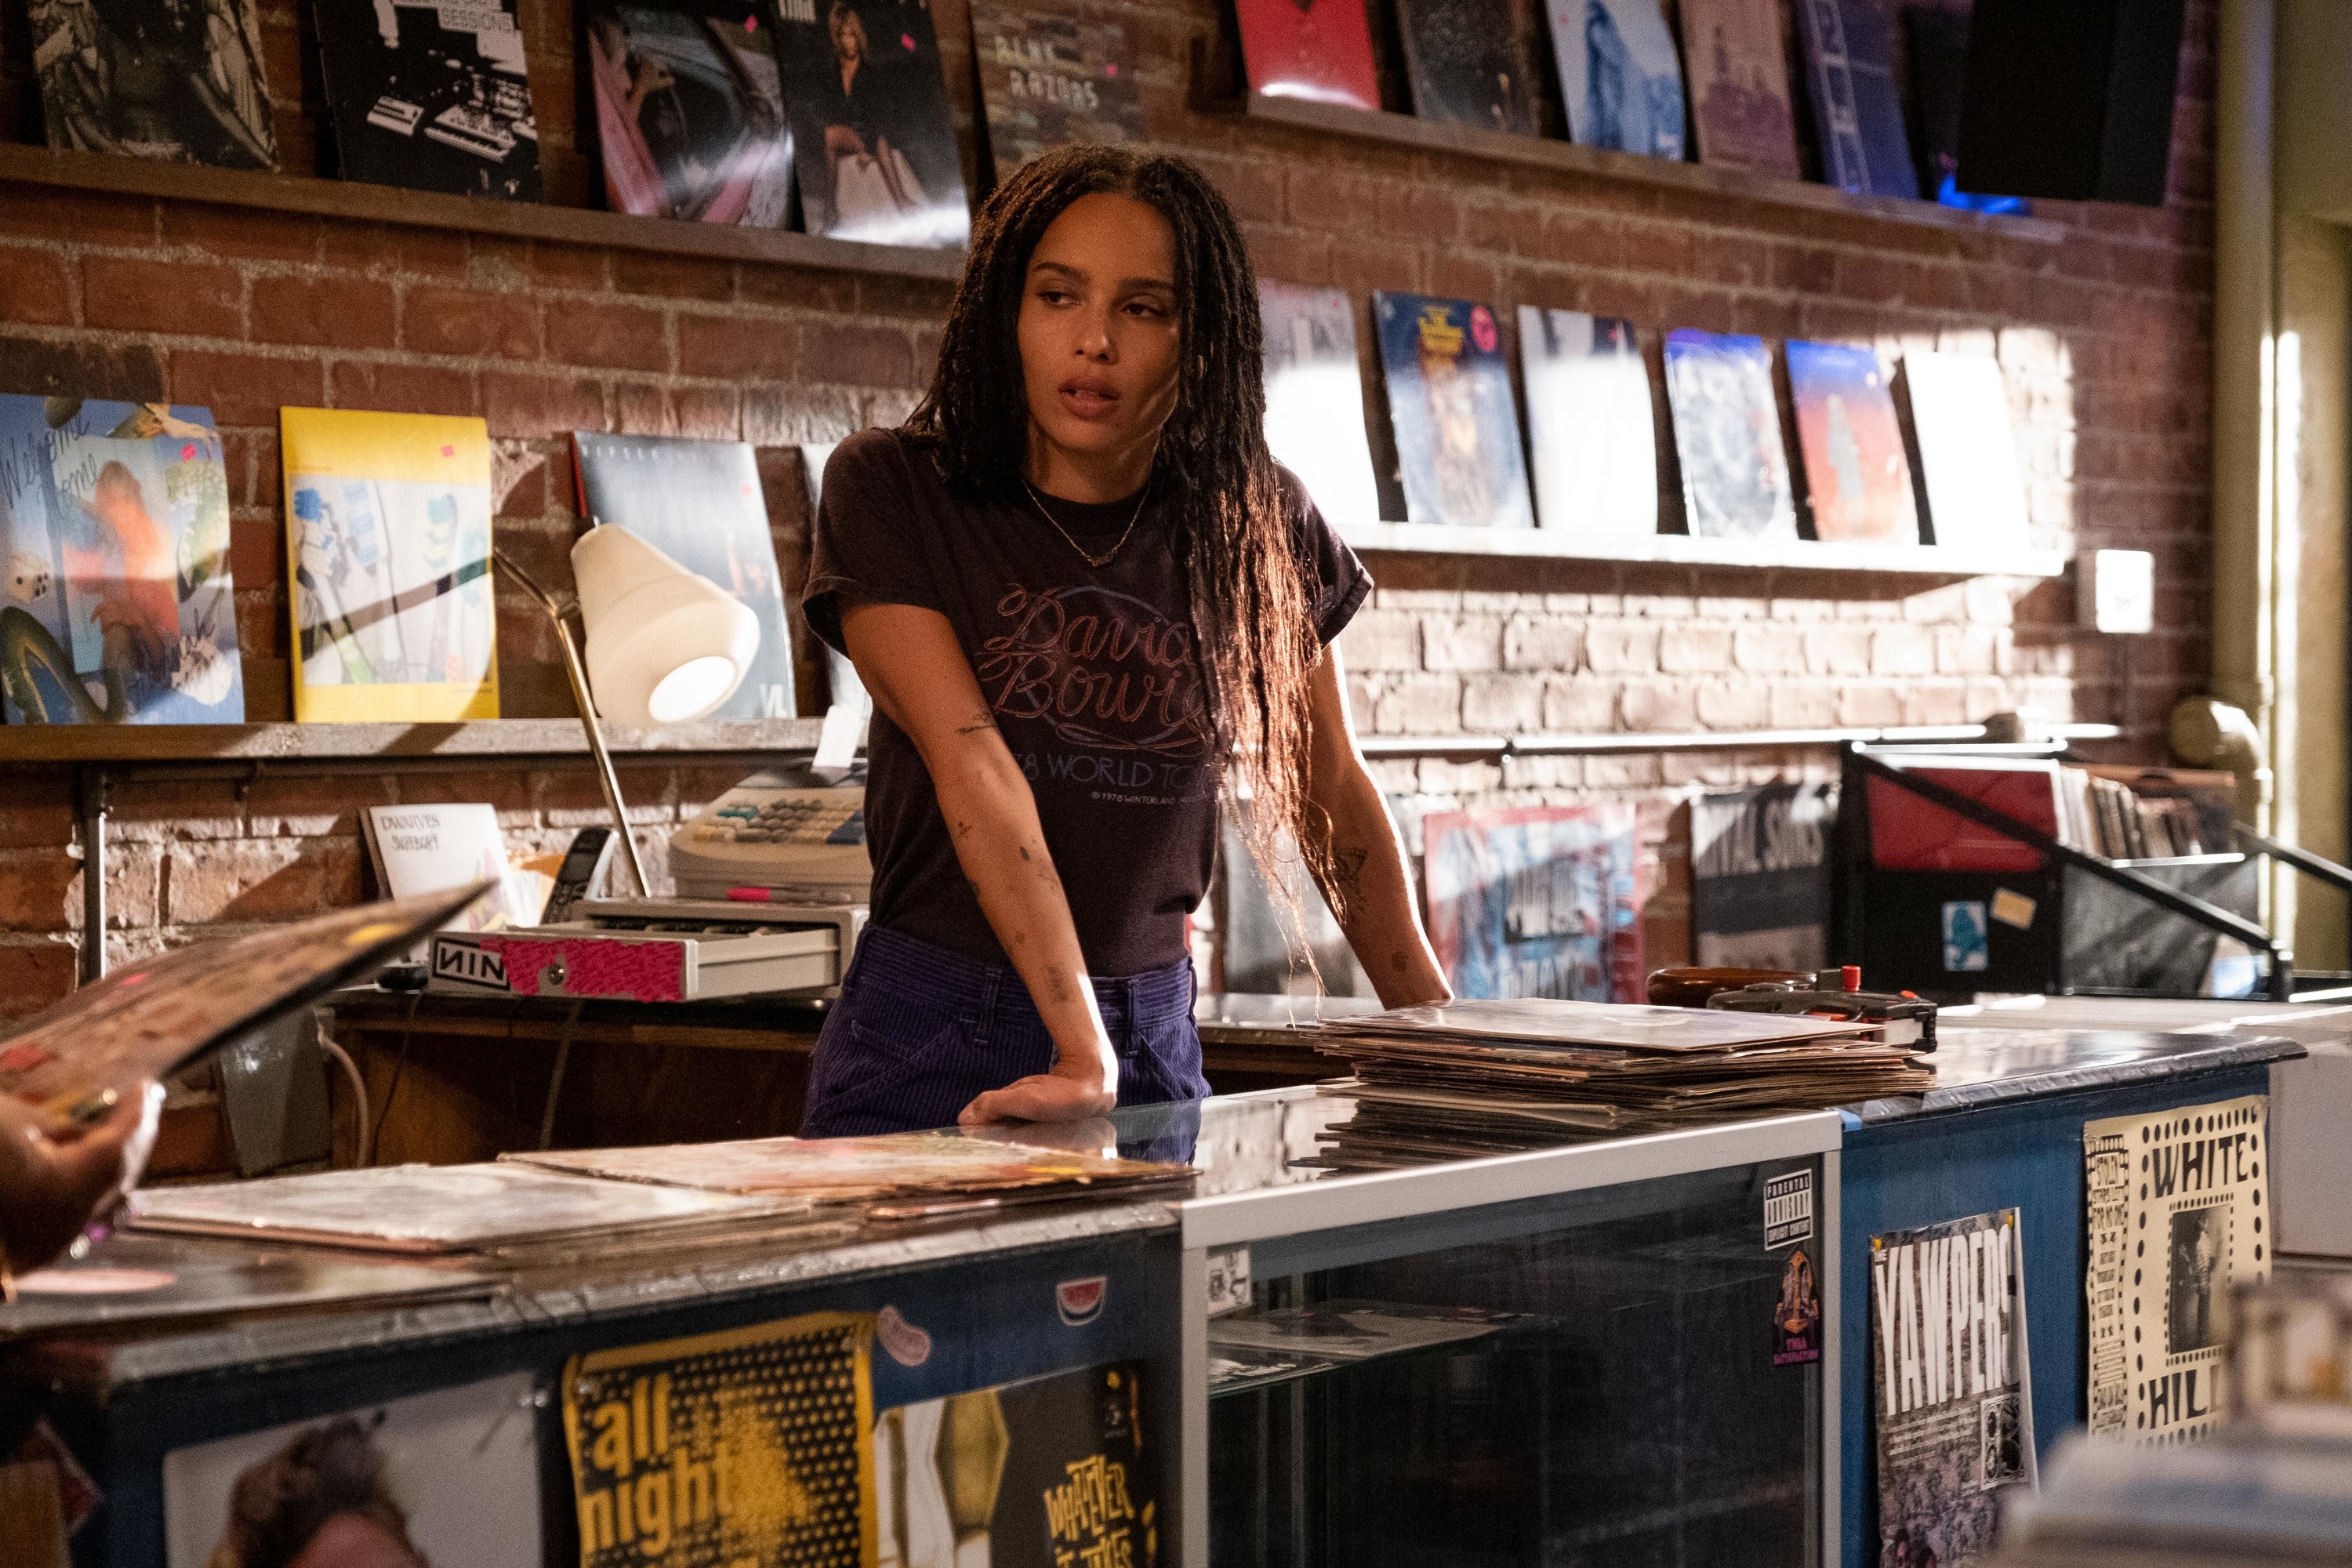 Zoë Kravitz as Rob in her record store in High Fidelity